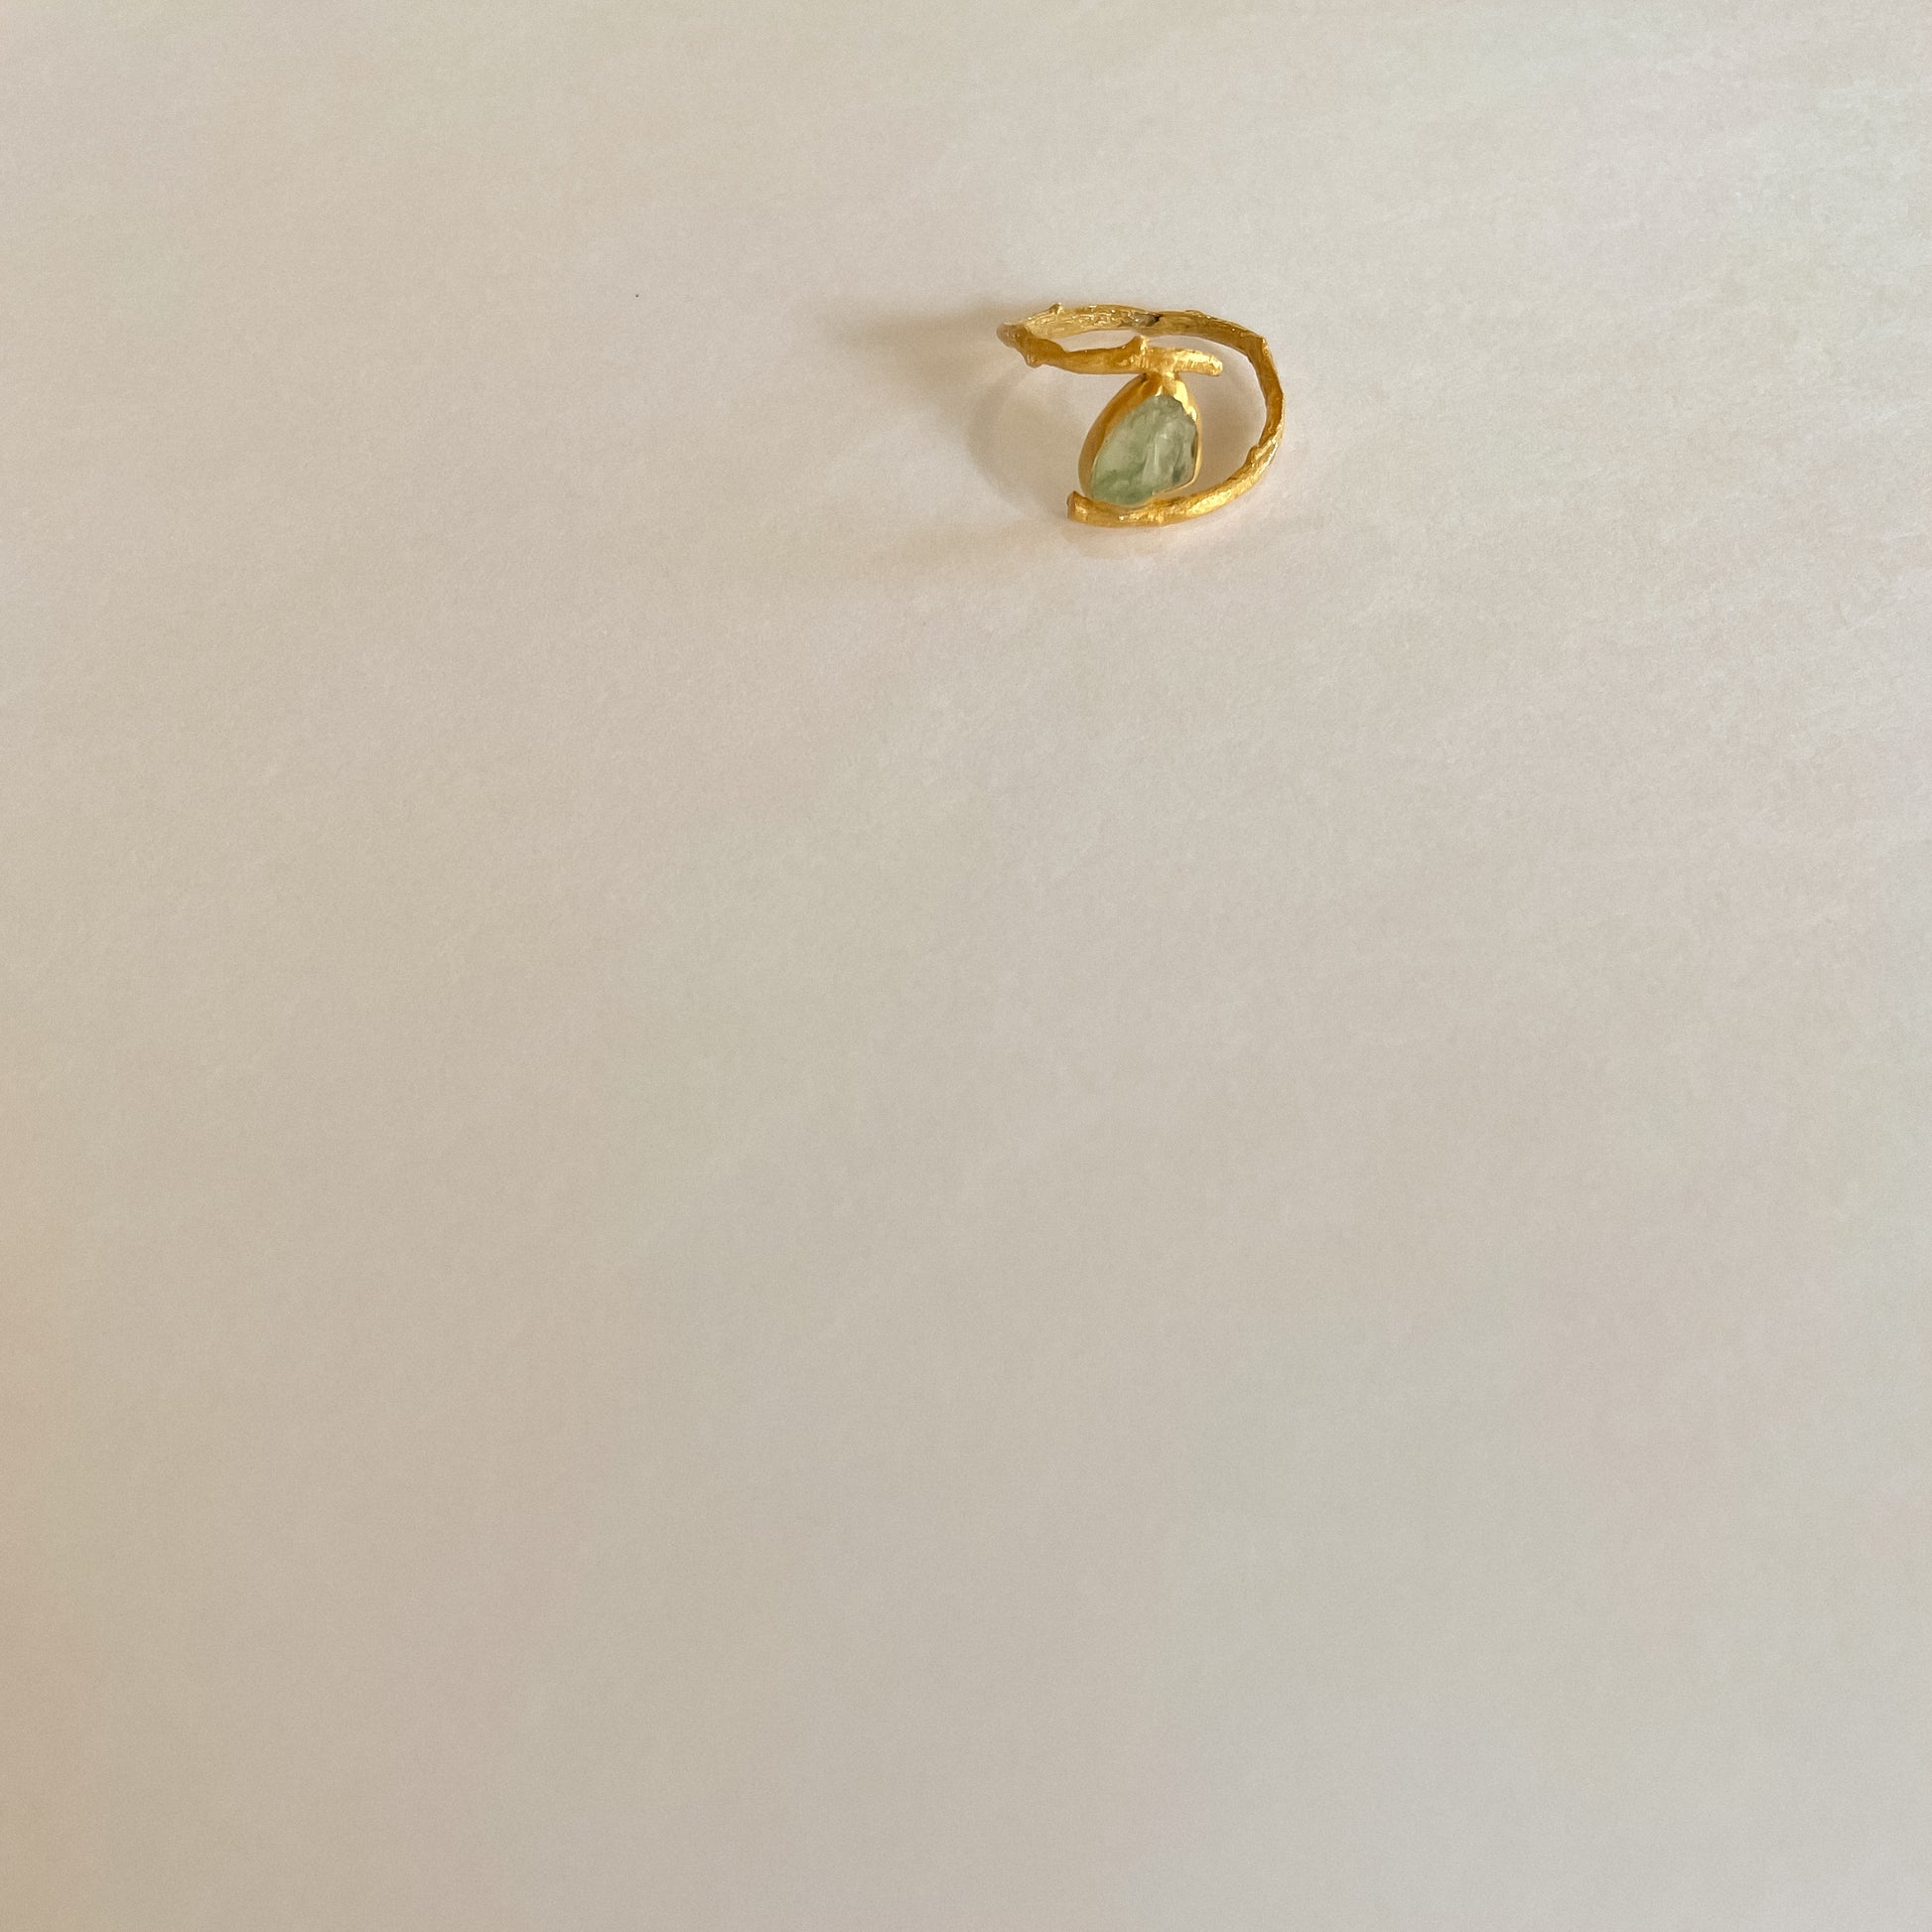 Aquamarine-rough-cut-gold-plated-twig-ring